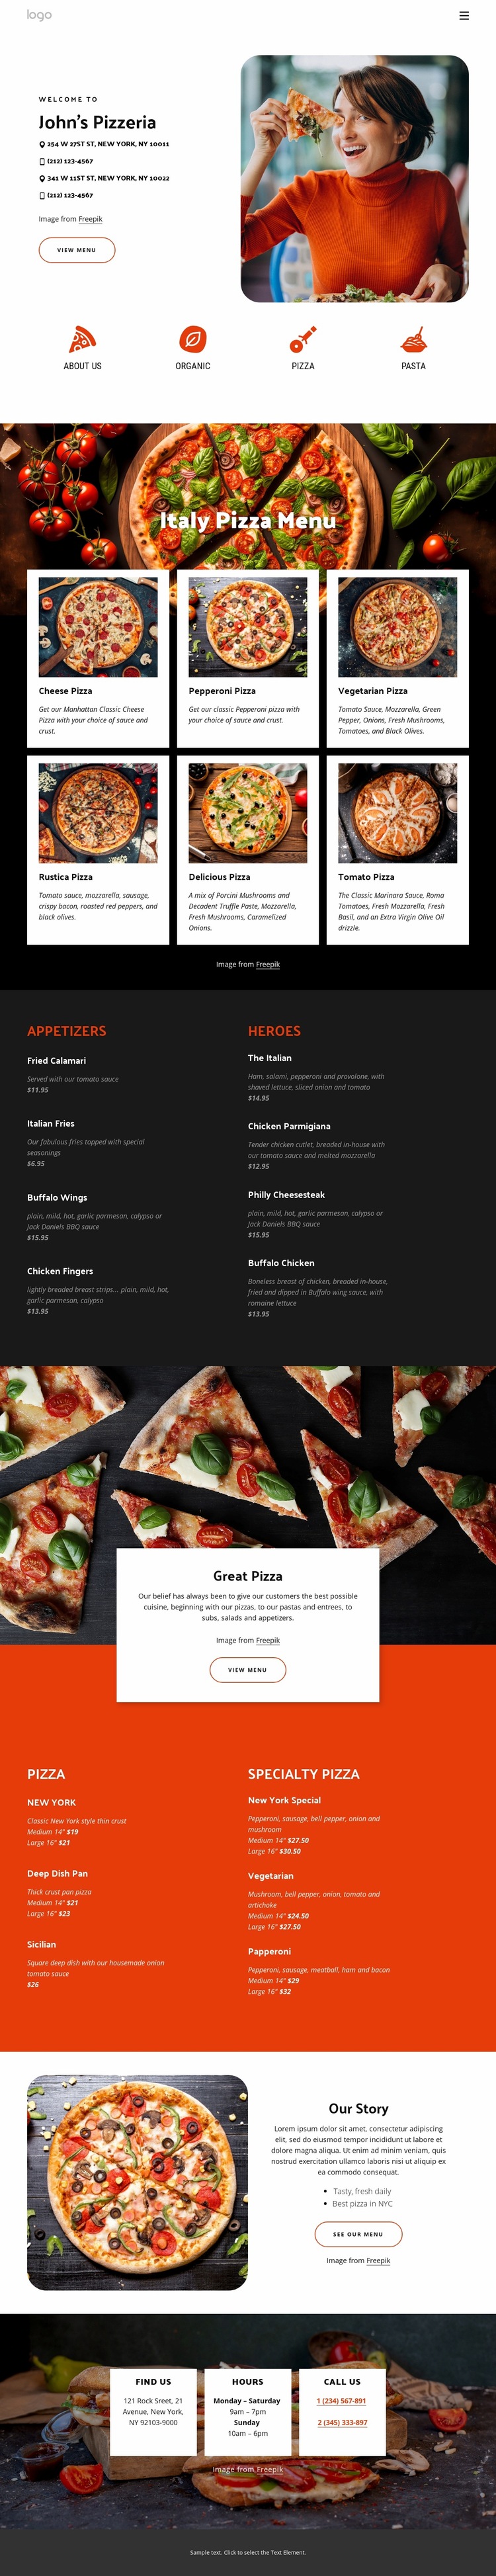 Pizzeria Website Builder Templates